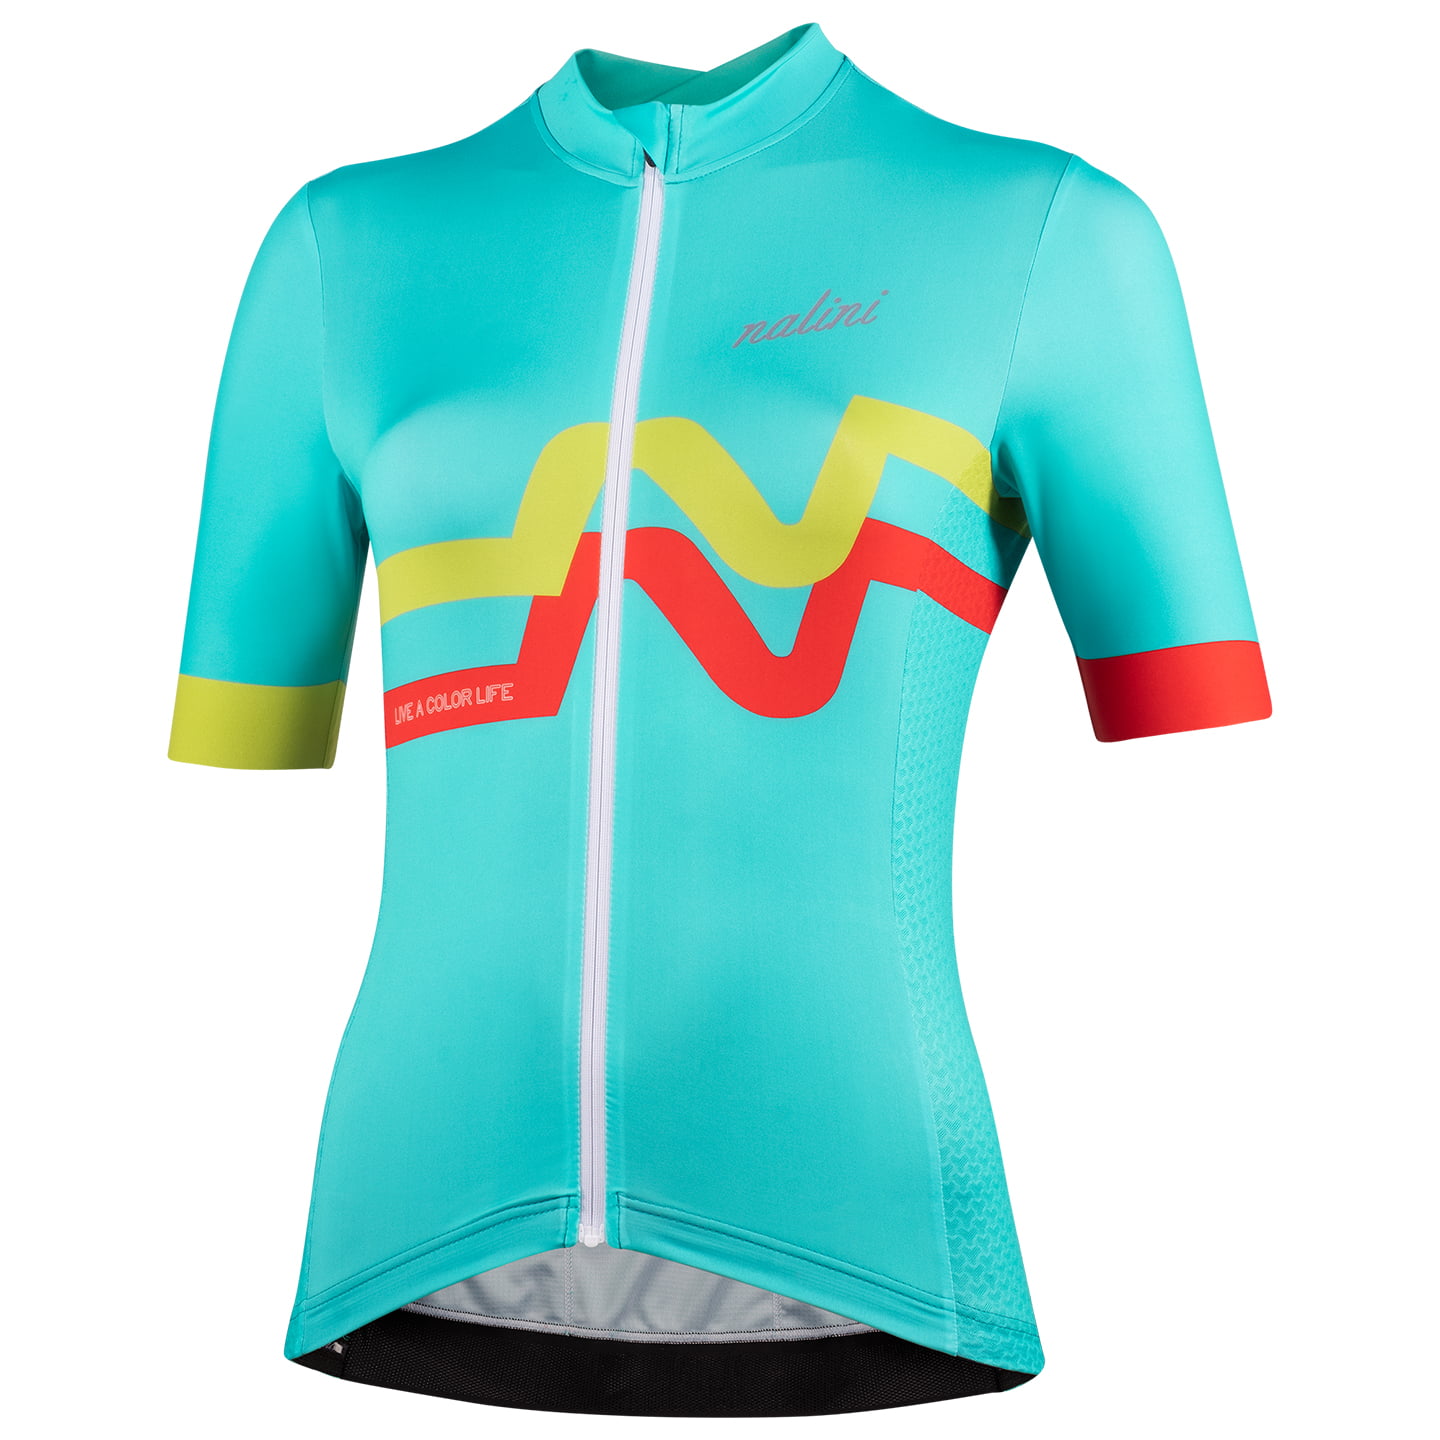 NALINI Denver Women’s Jersey Women’s Short Sleeve Jersey, size L, Cycling jersey, Cycling clothing